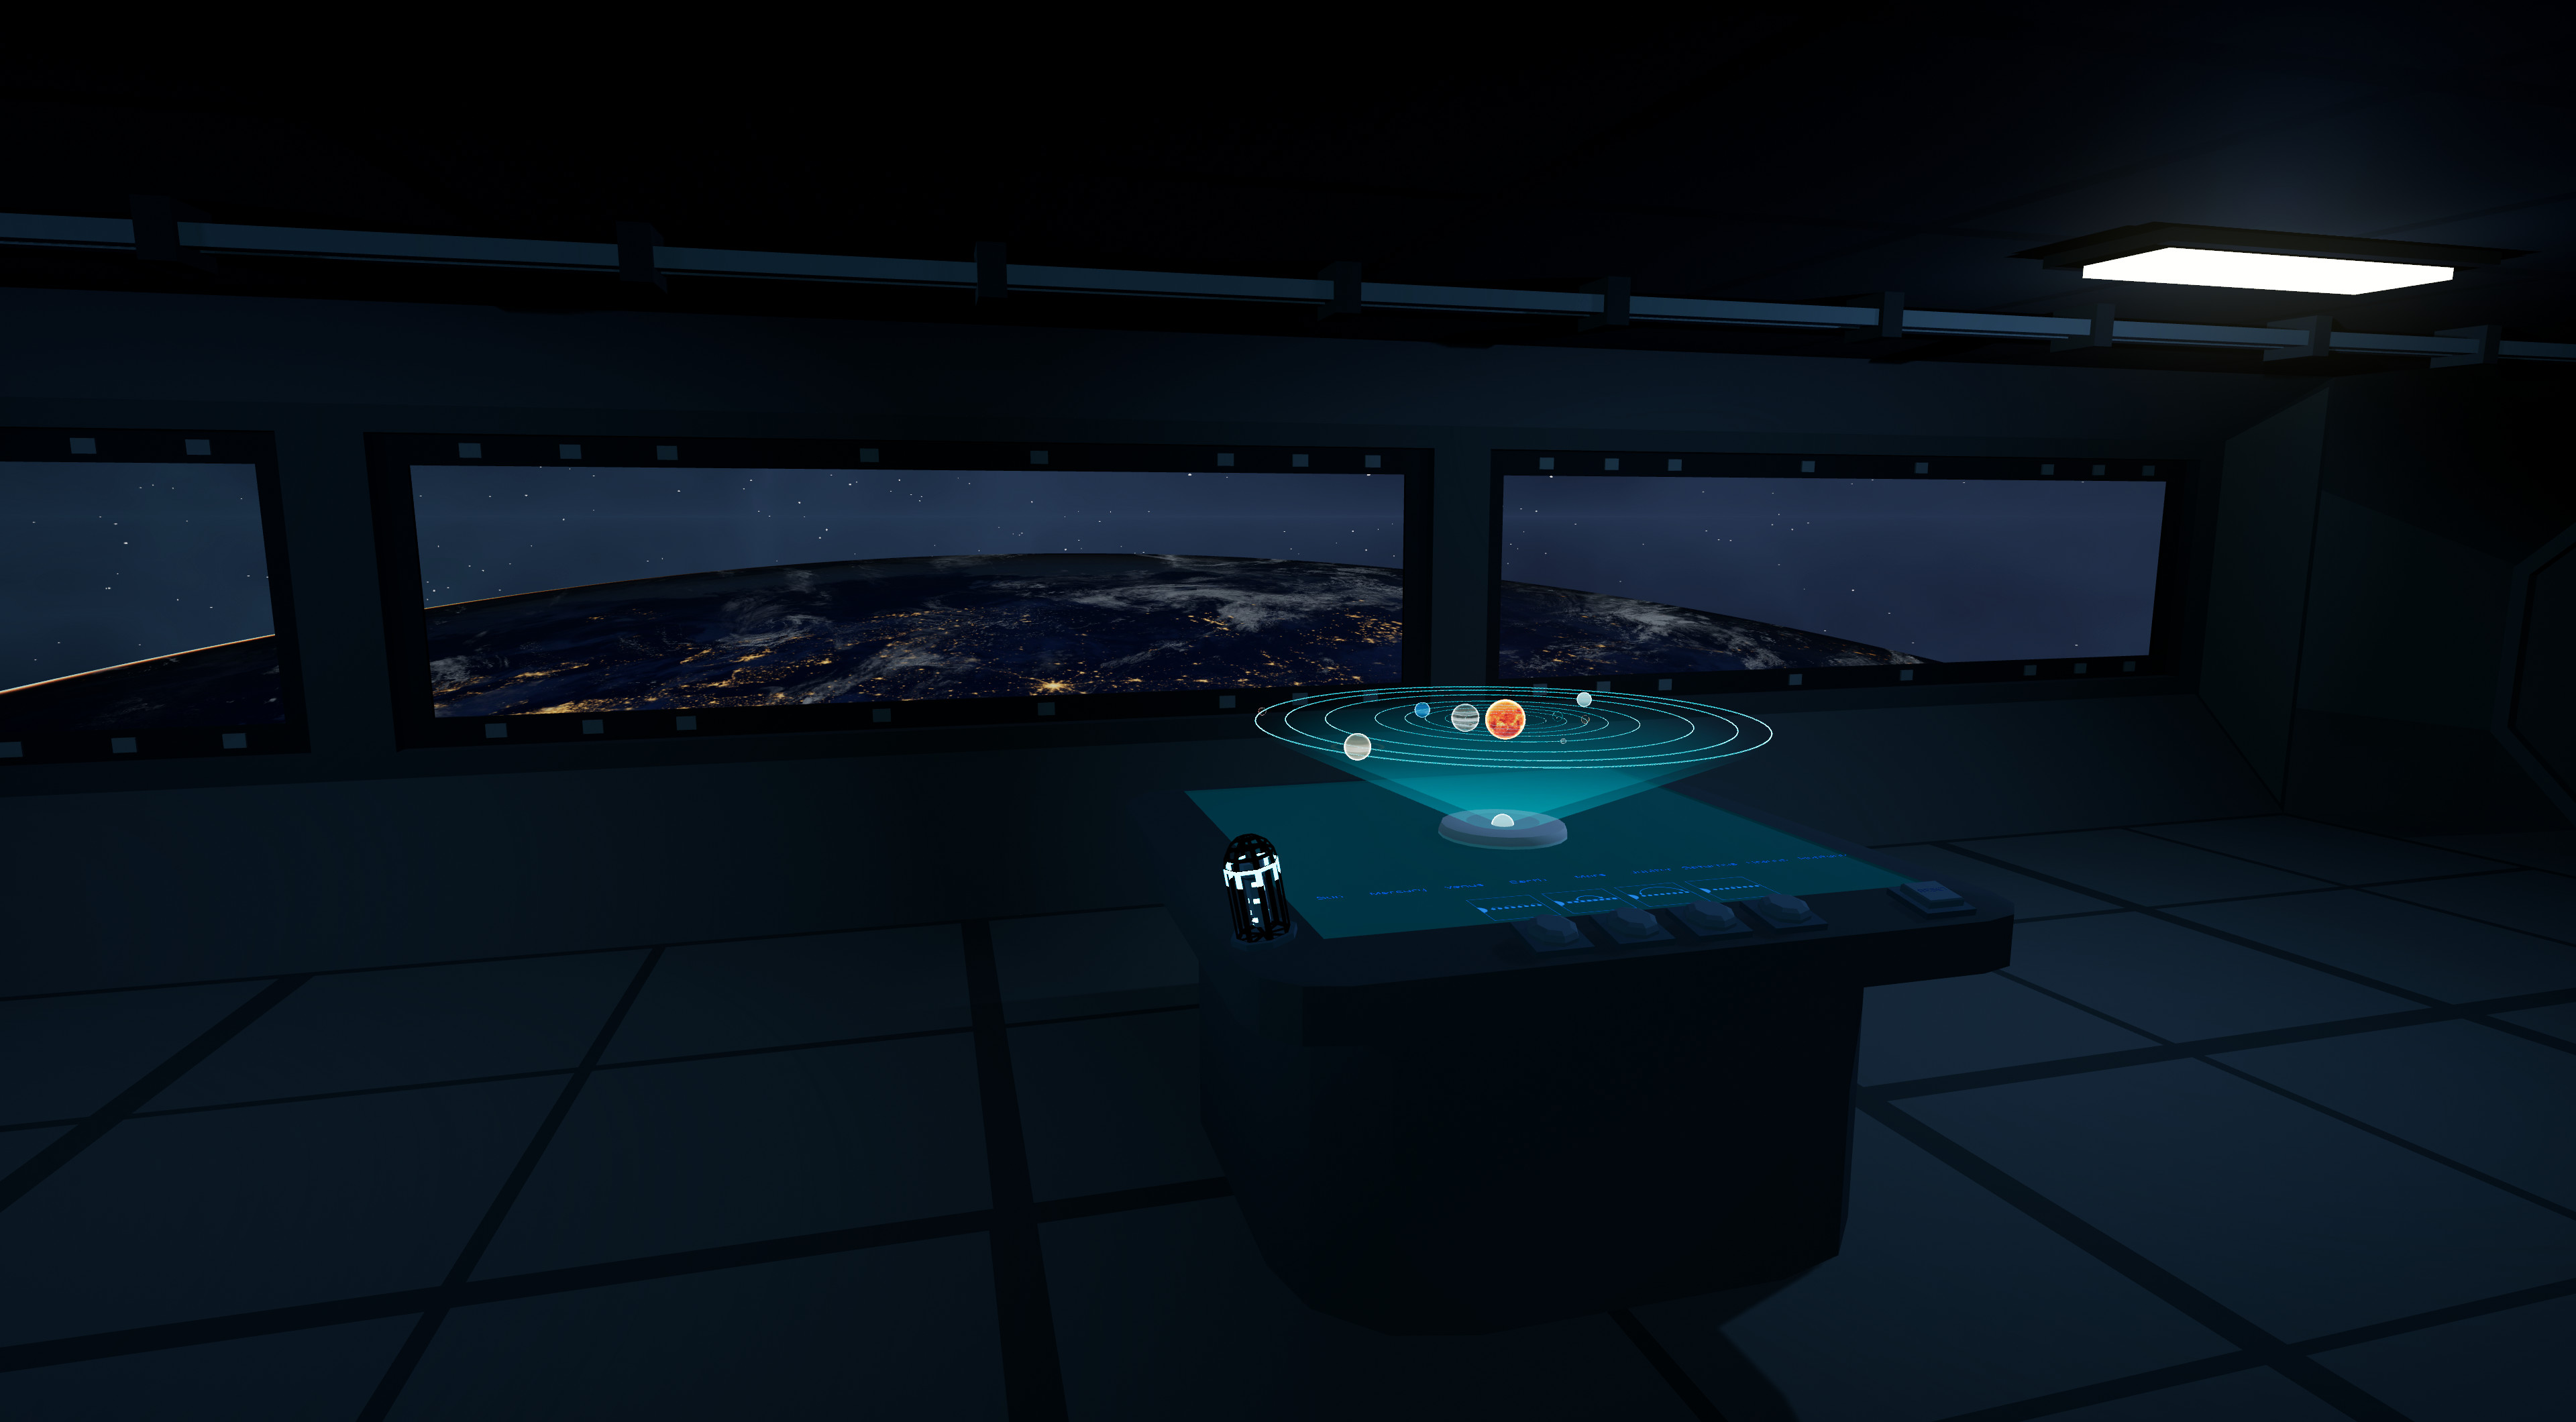 Spacescape screenshot